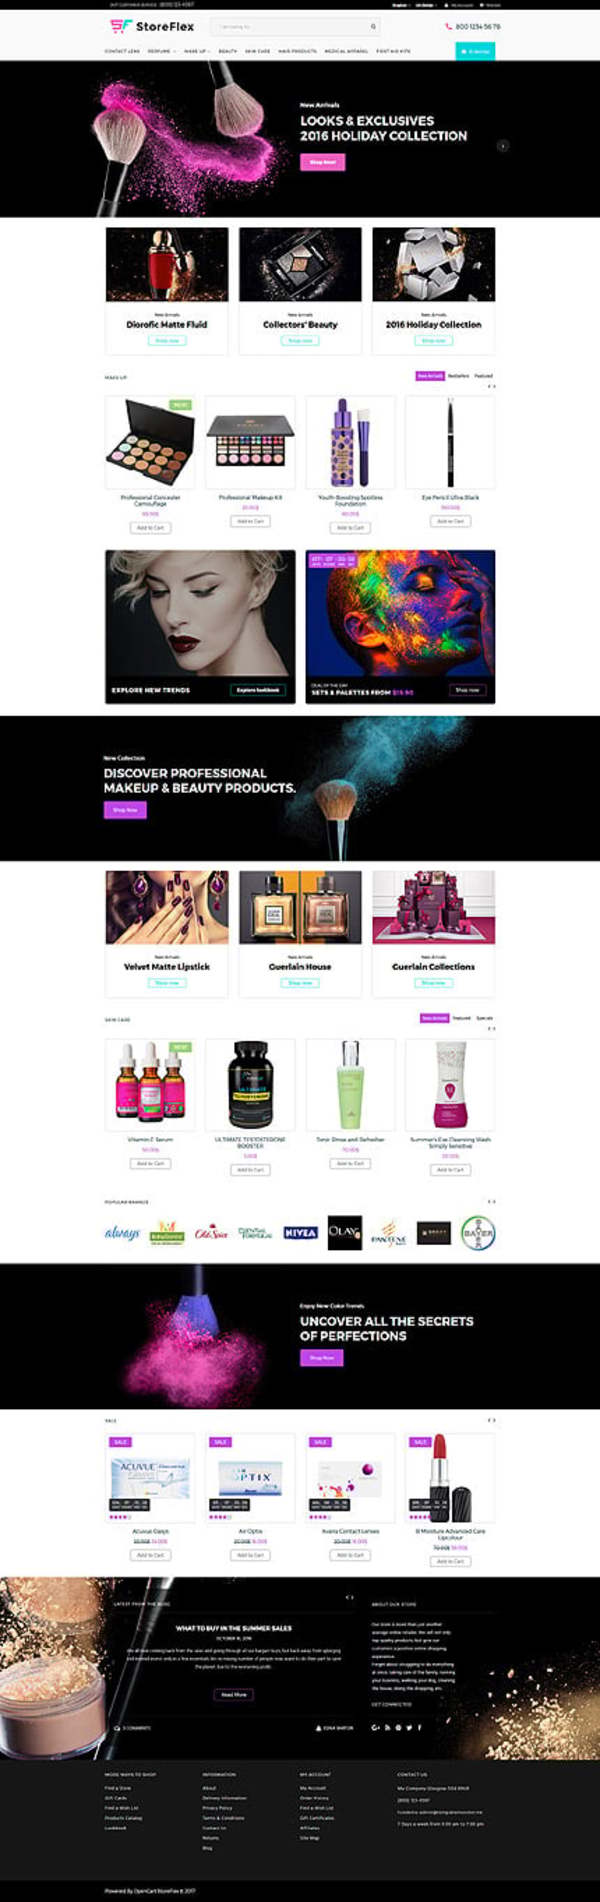 StoreFlex - Cosmetics Store Responsive OpenCart Template